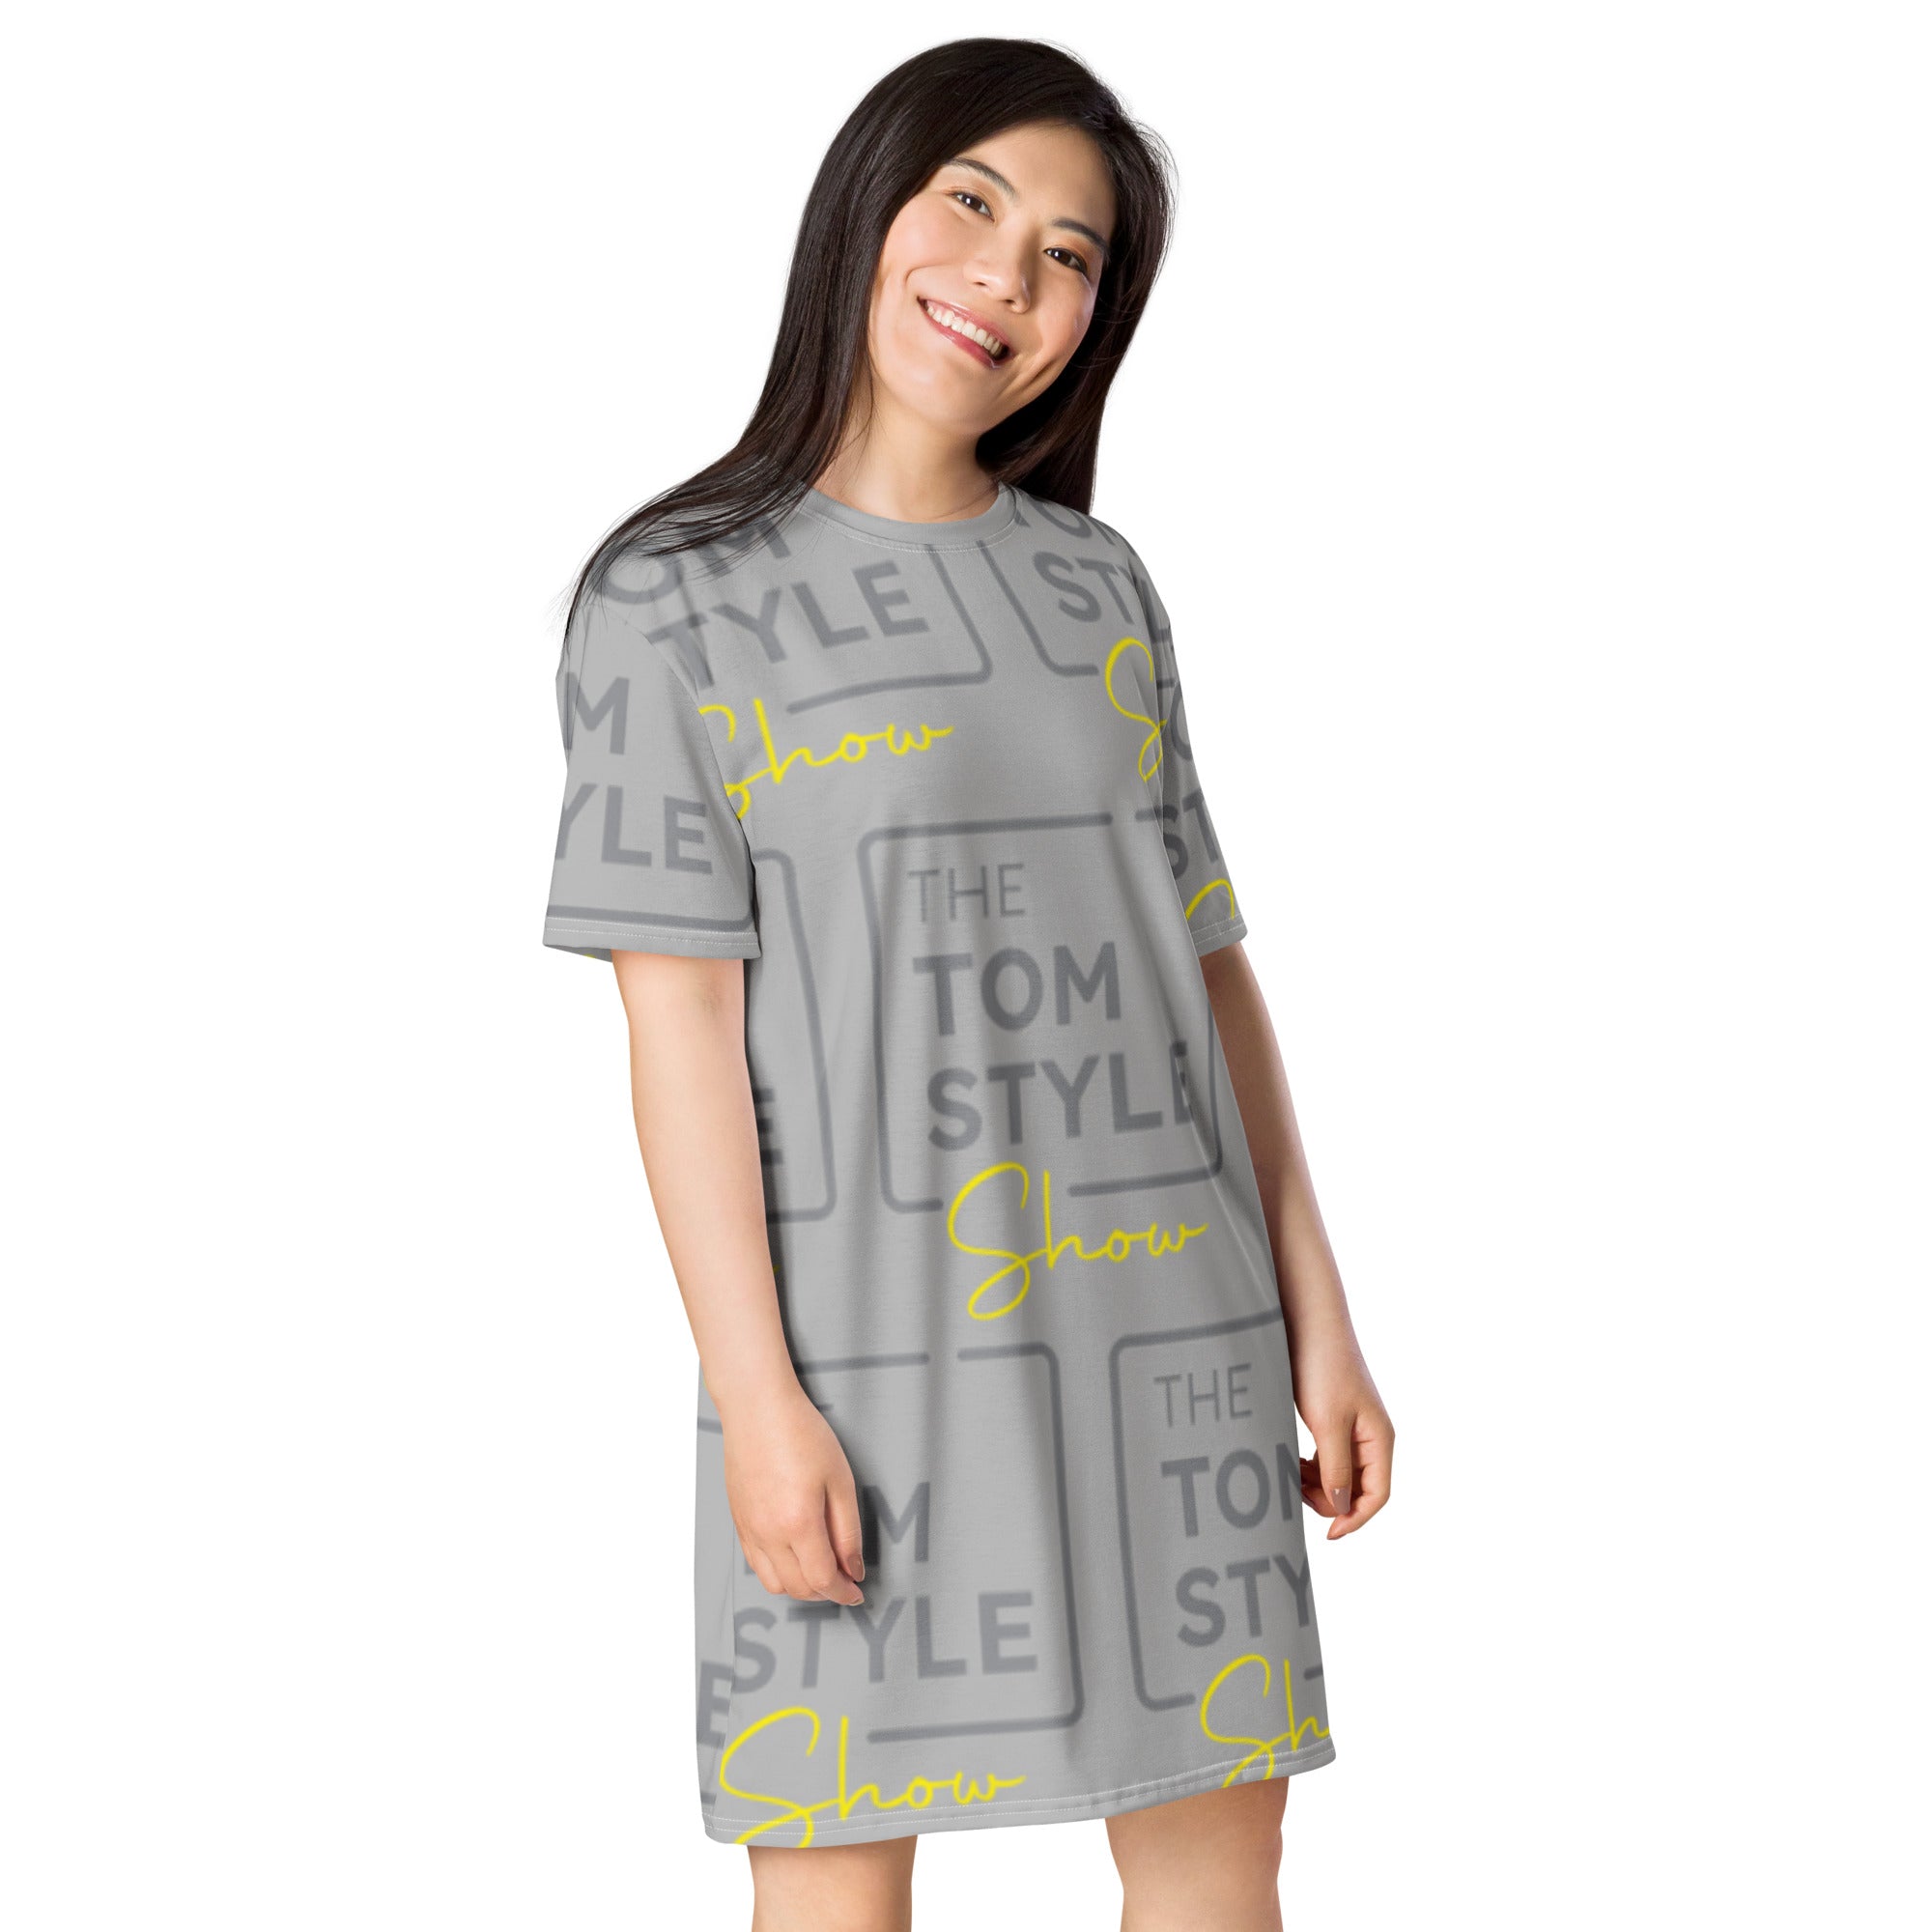 Women's T-shirt Dress - Tom Style Show